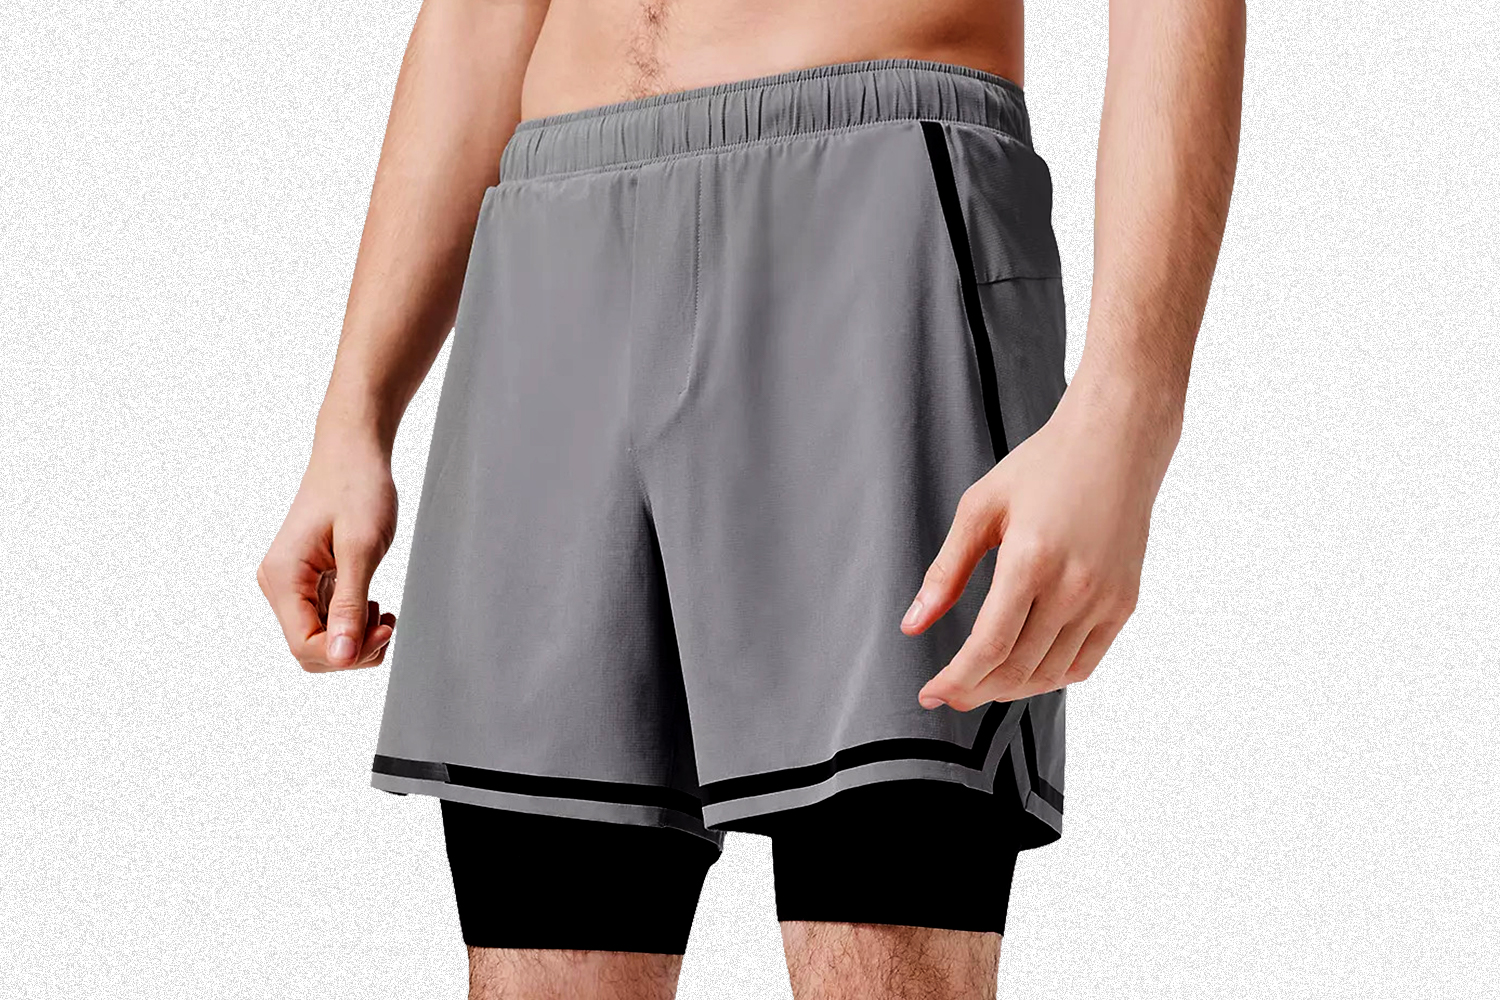 Grab 30% Off Lululemon's Lined Surge Running Shorts - InsideHook